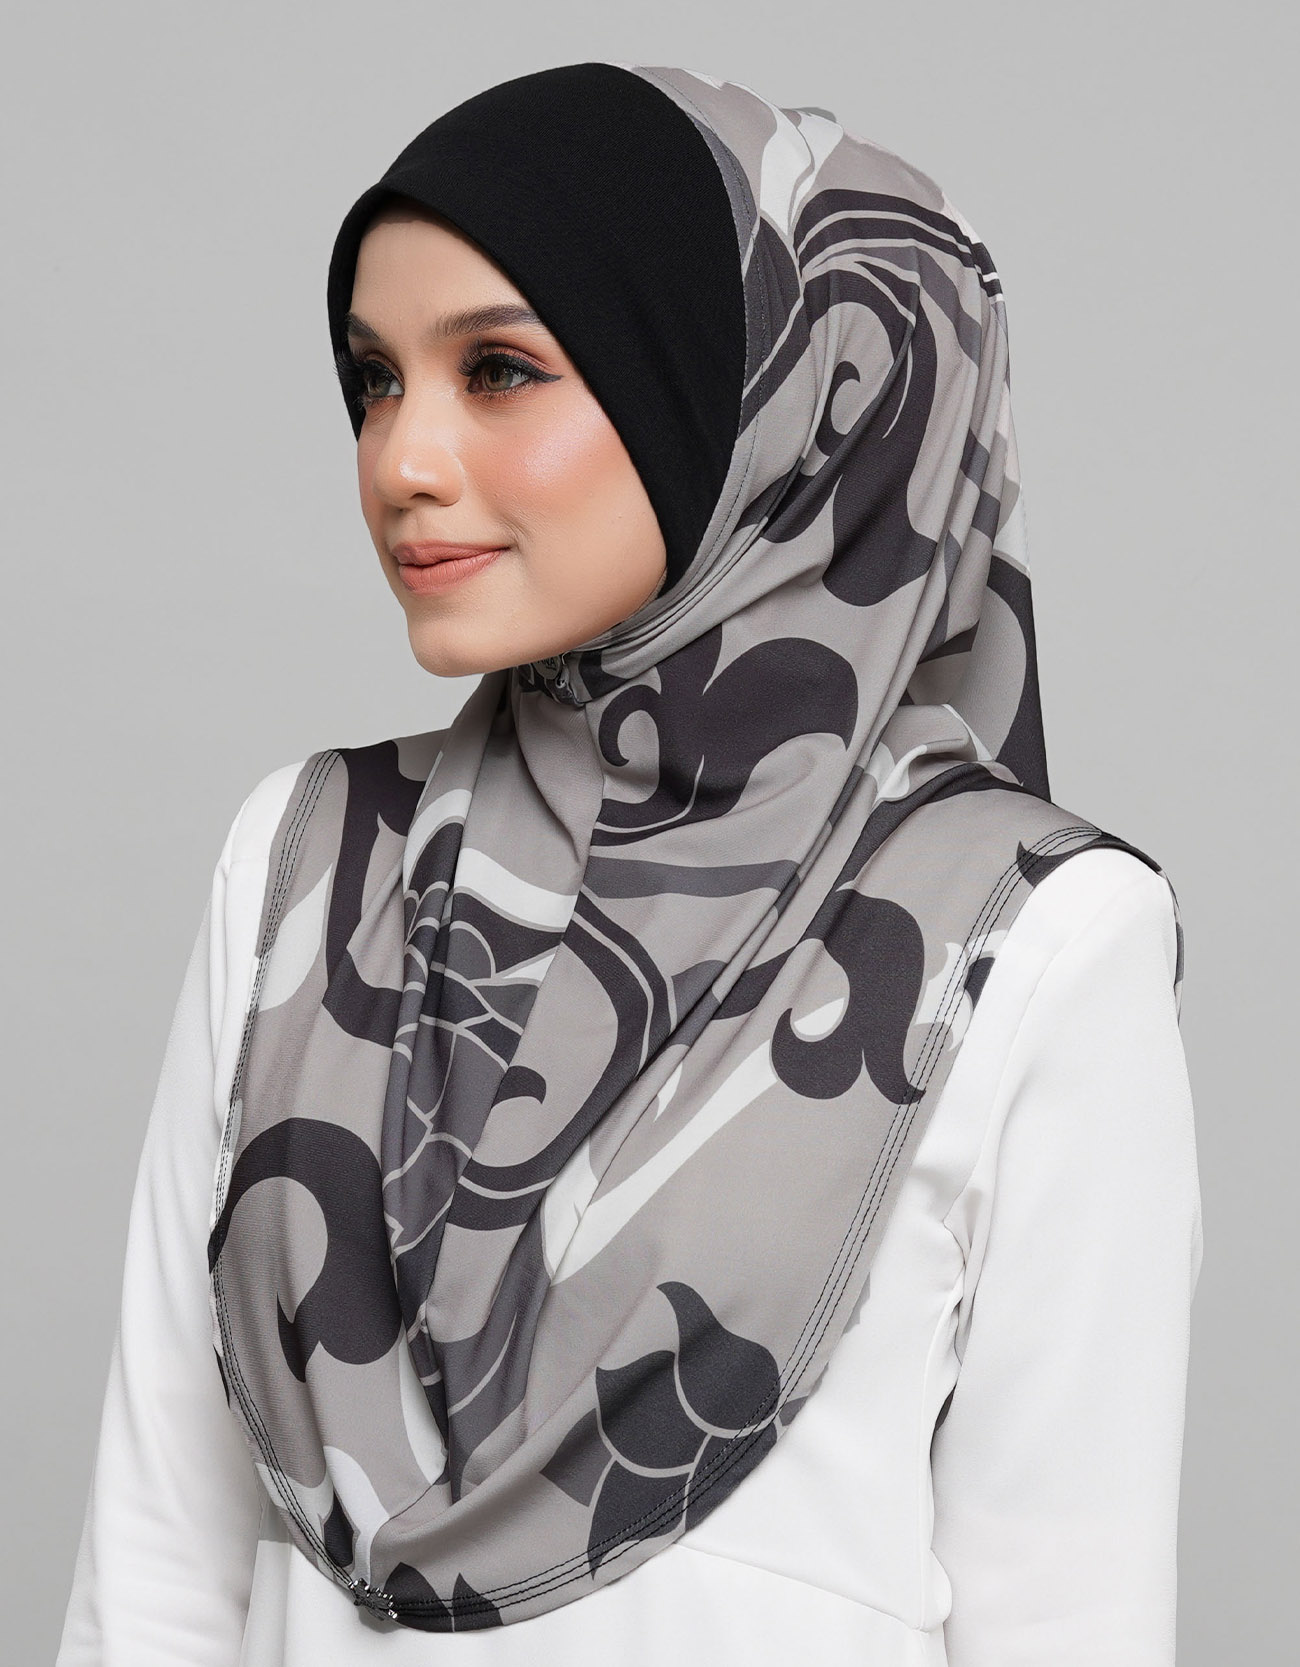 Express Hijab Damia Signature 10 - Black Edition&w=300&zc=1